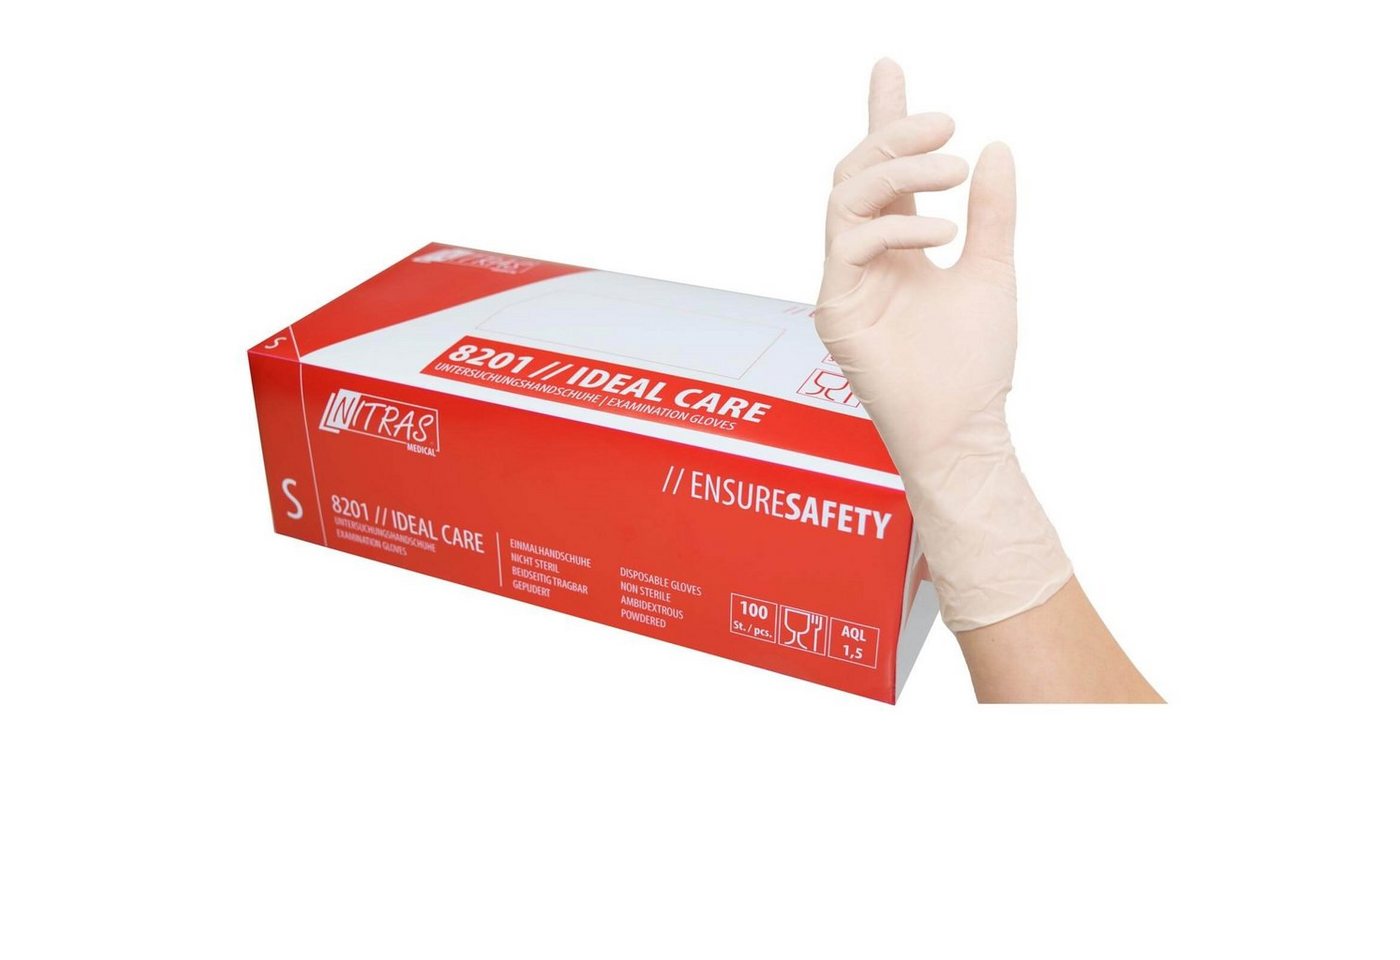 Nitras Medical Einweghandschuhe NITRAS Ideal Care 8201 Latex Einmalhandschuhe, Handschuhe, 100 Stück (Spar-Set) von Nitras Medical